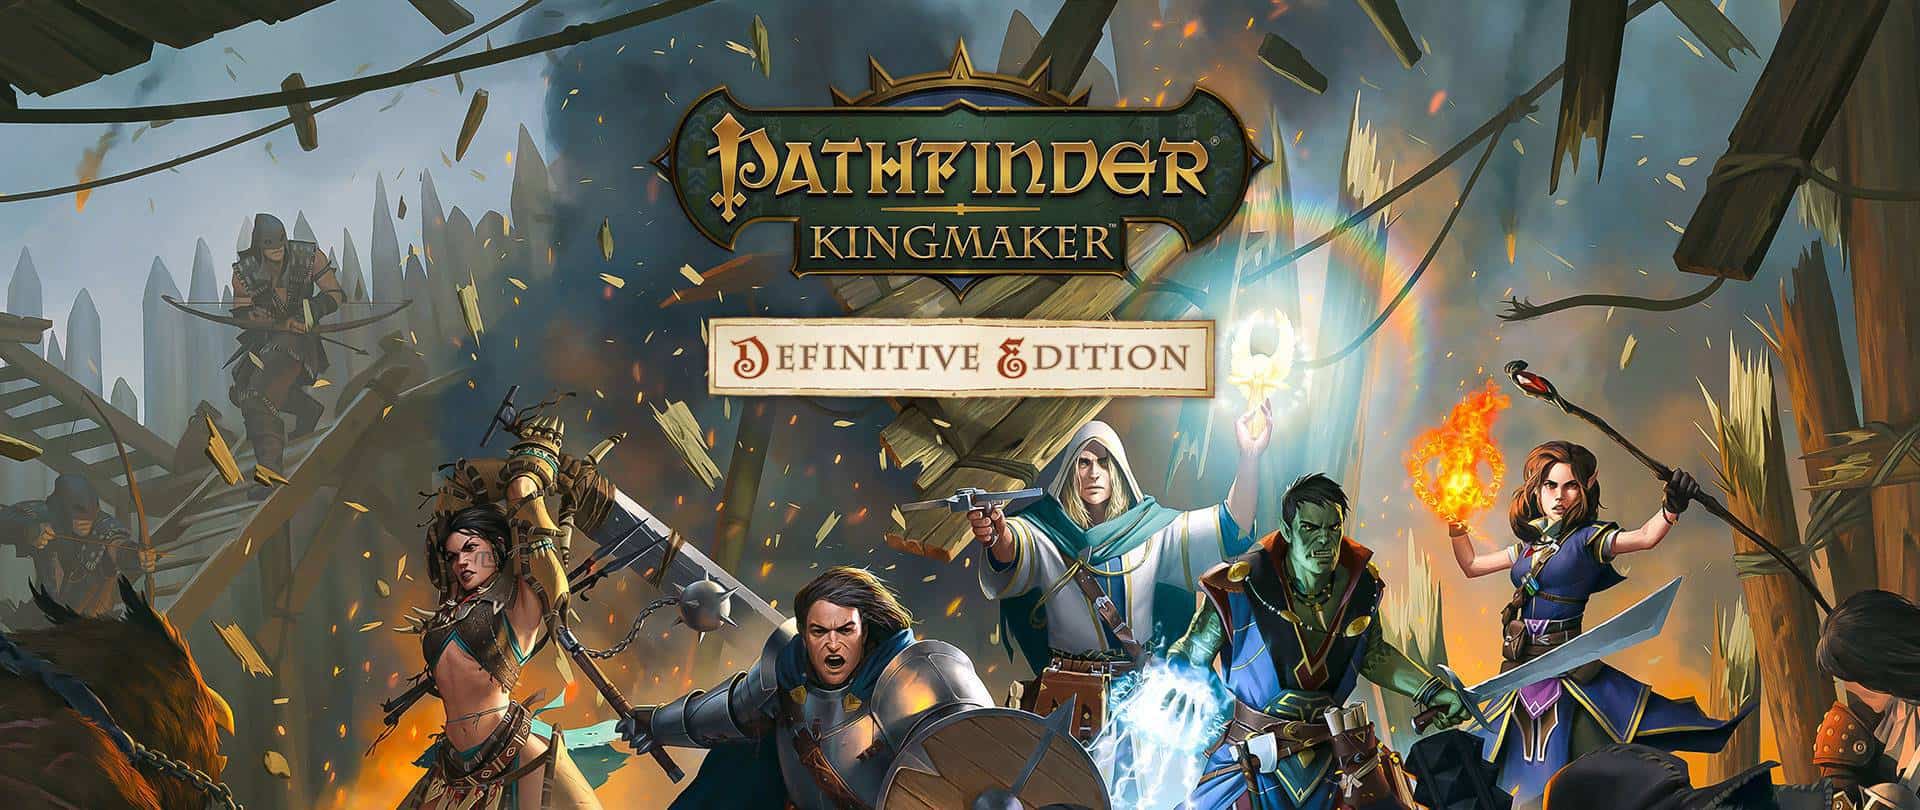 Pathfinder: Kingmaker – Definitive Edition обзор игры